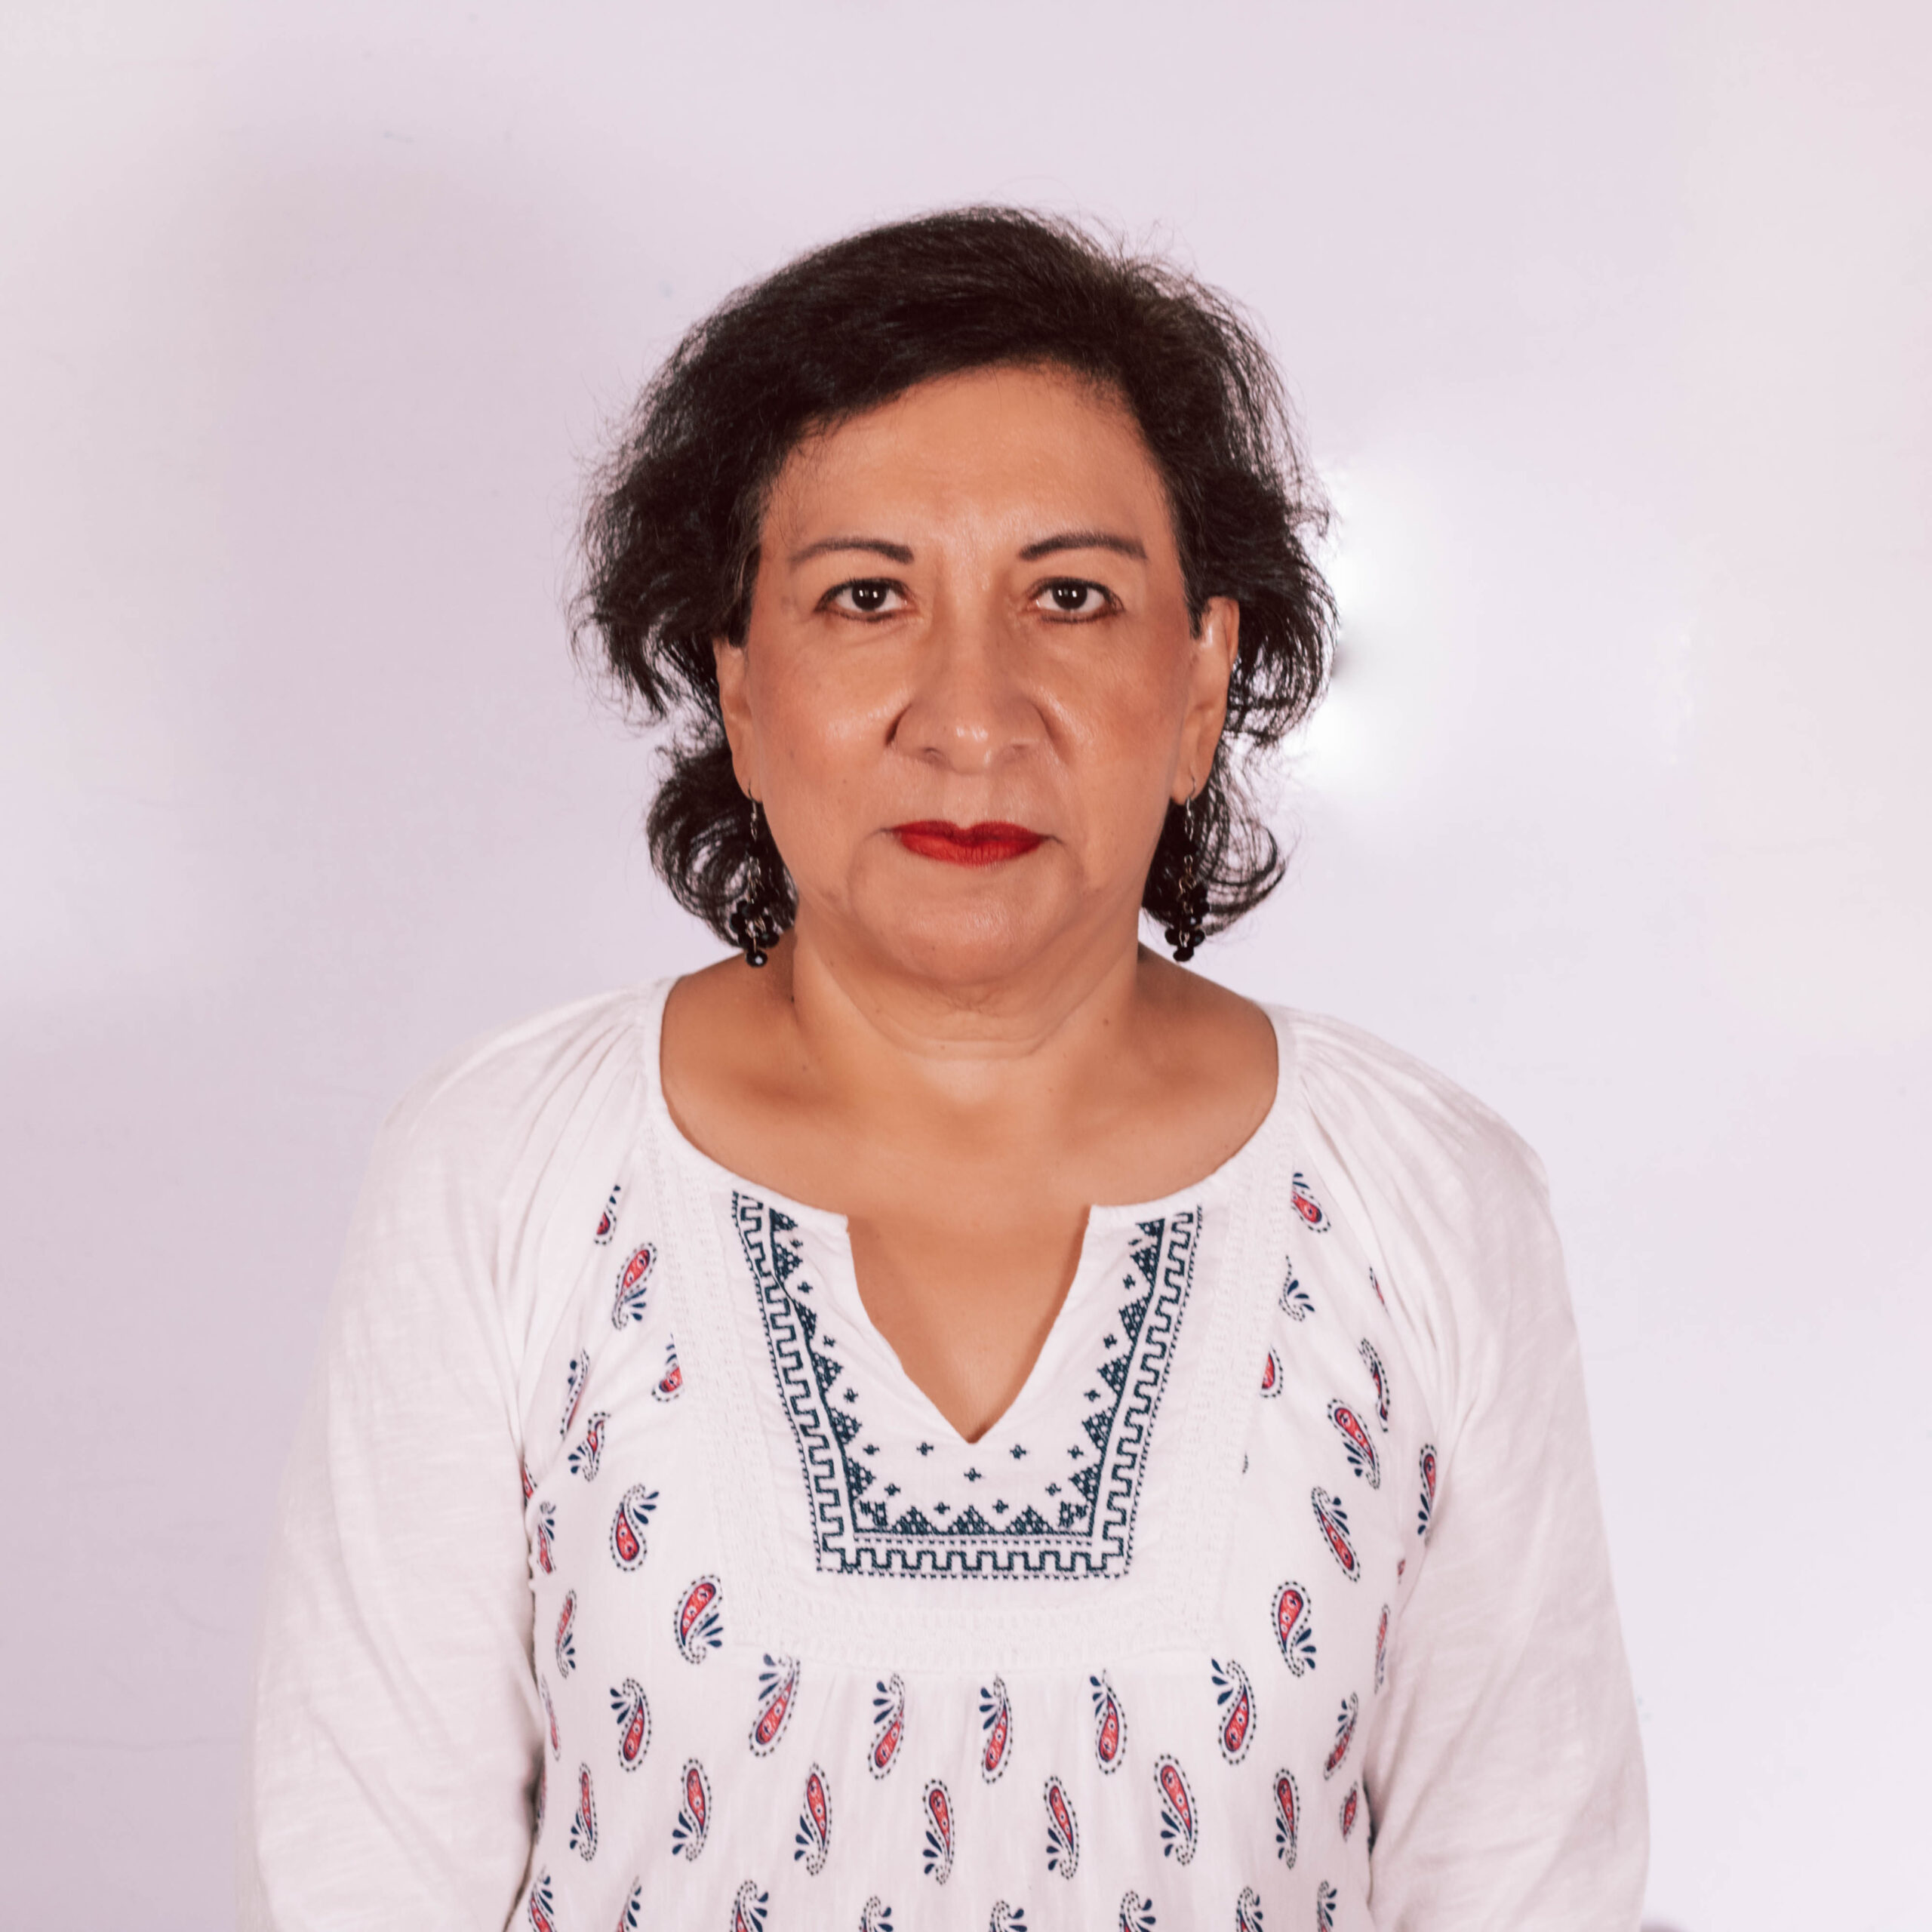 María Eugenia Soriano Escalante